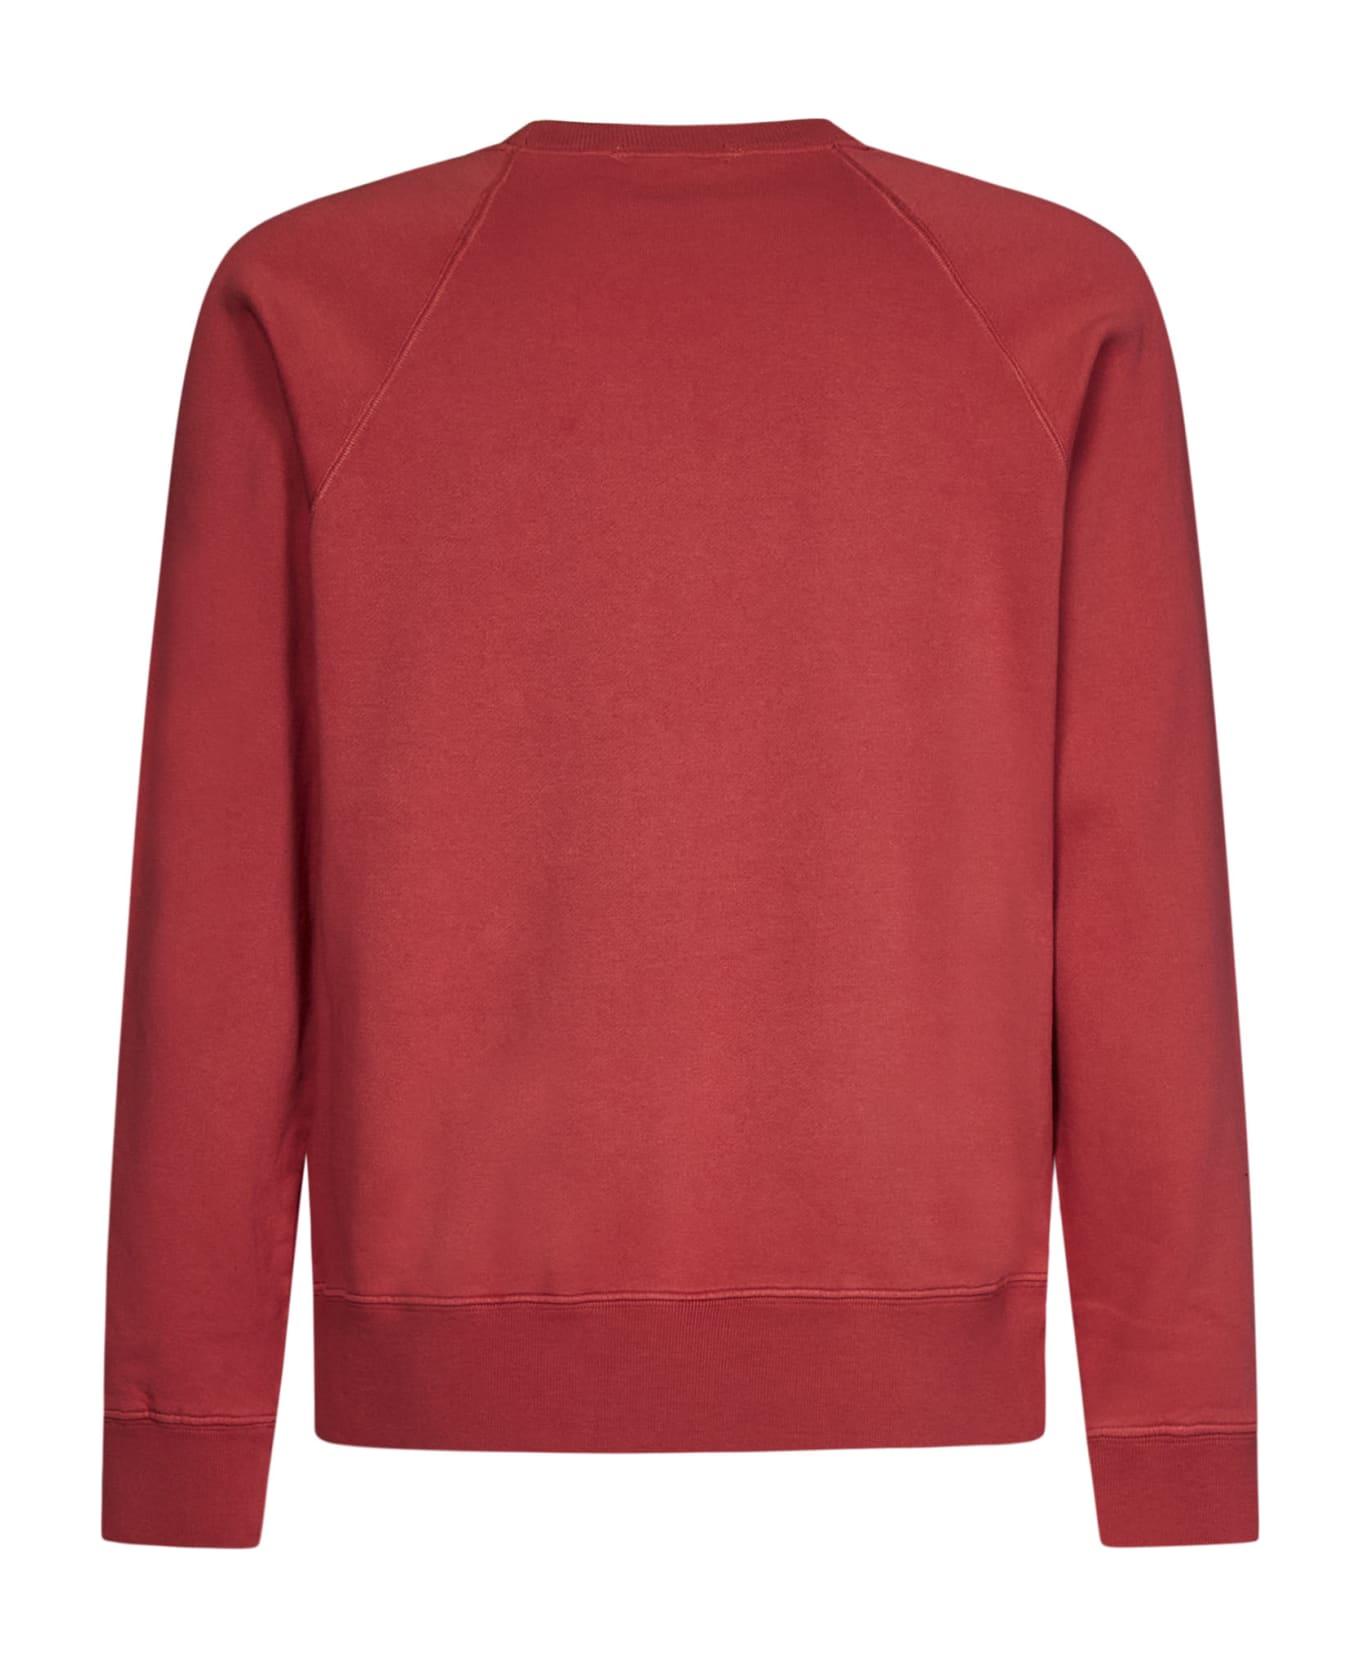 Tom Ford Sweatshirt - Red